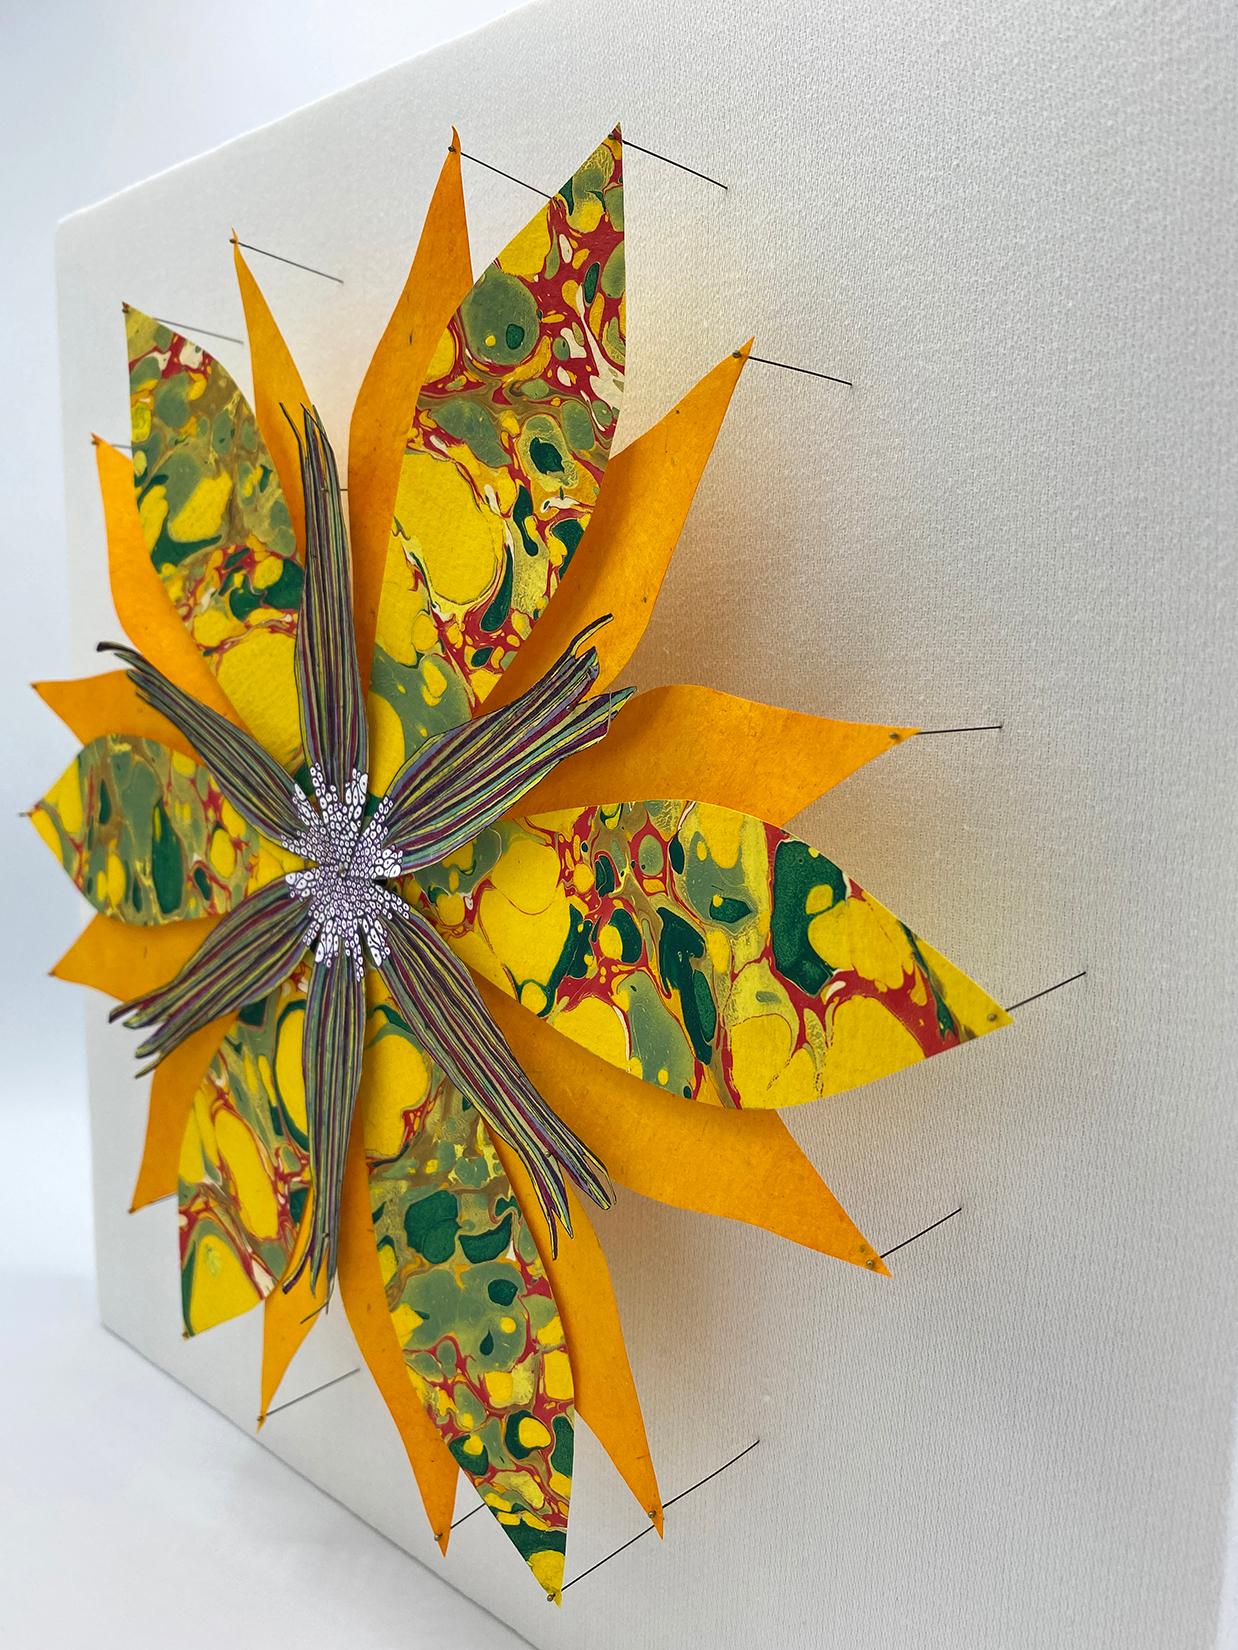 Sunshine Star Flower, Bright Botanical Wall Sculpture, Yellow, Orange, Green - Contemporary Mixed Media Art by Jill Parisi